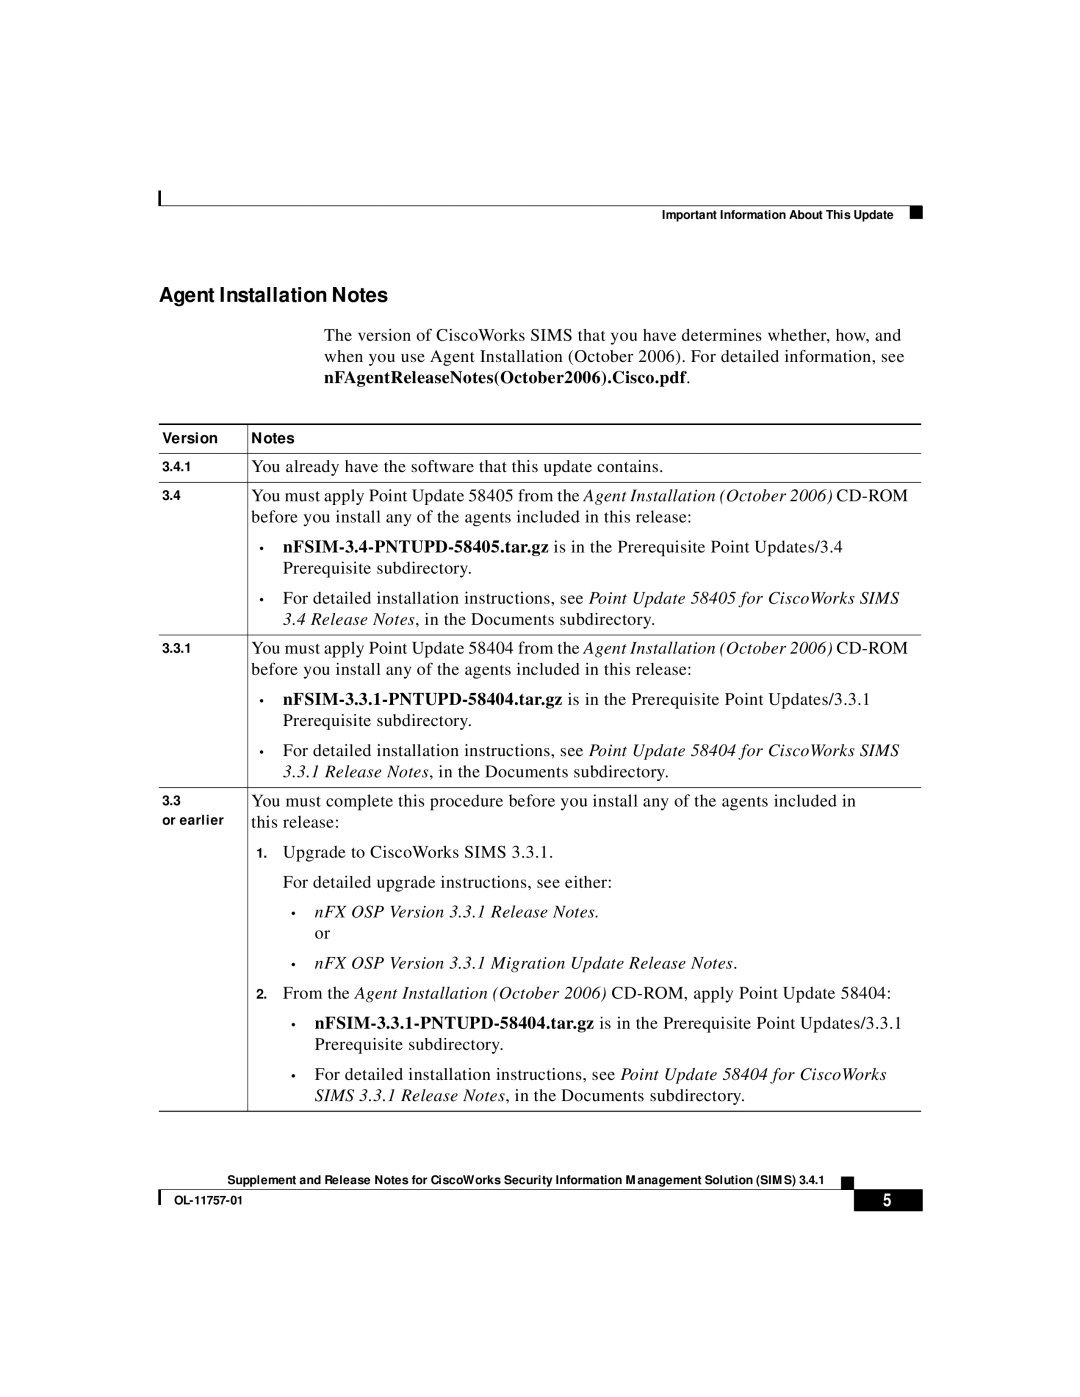 Cisco Systems OL-11757-01 manual Agent Installation Notes, Version 